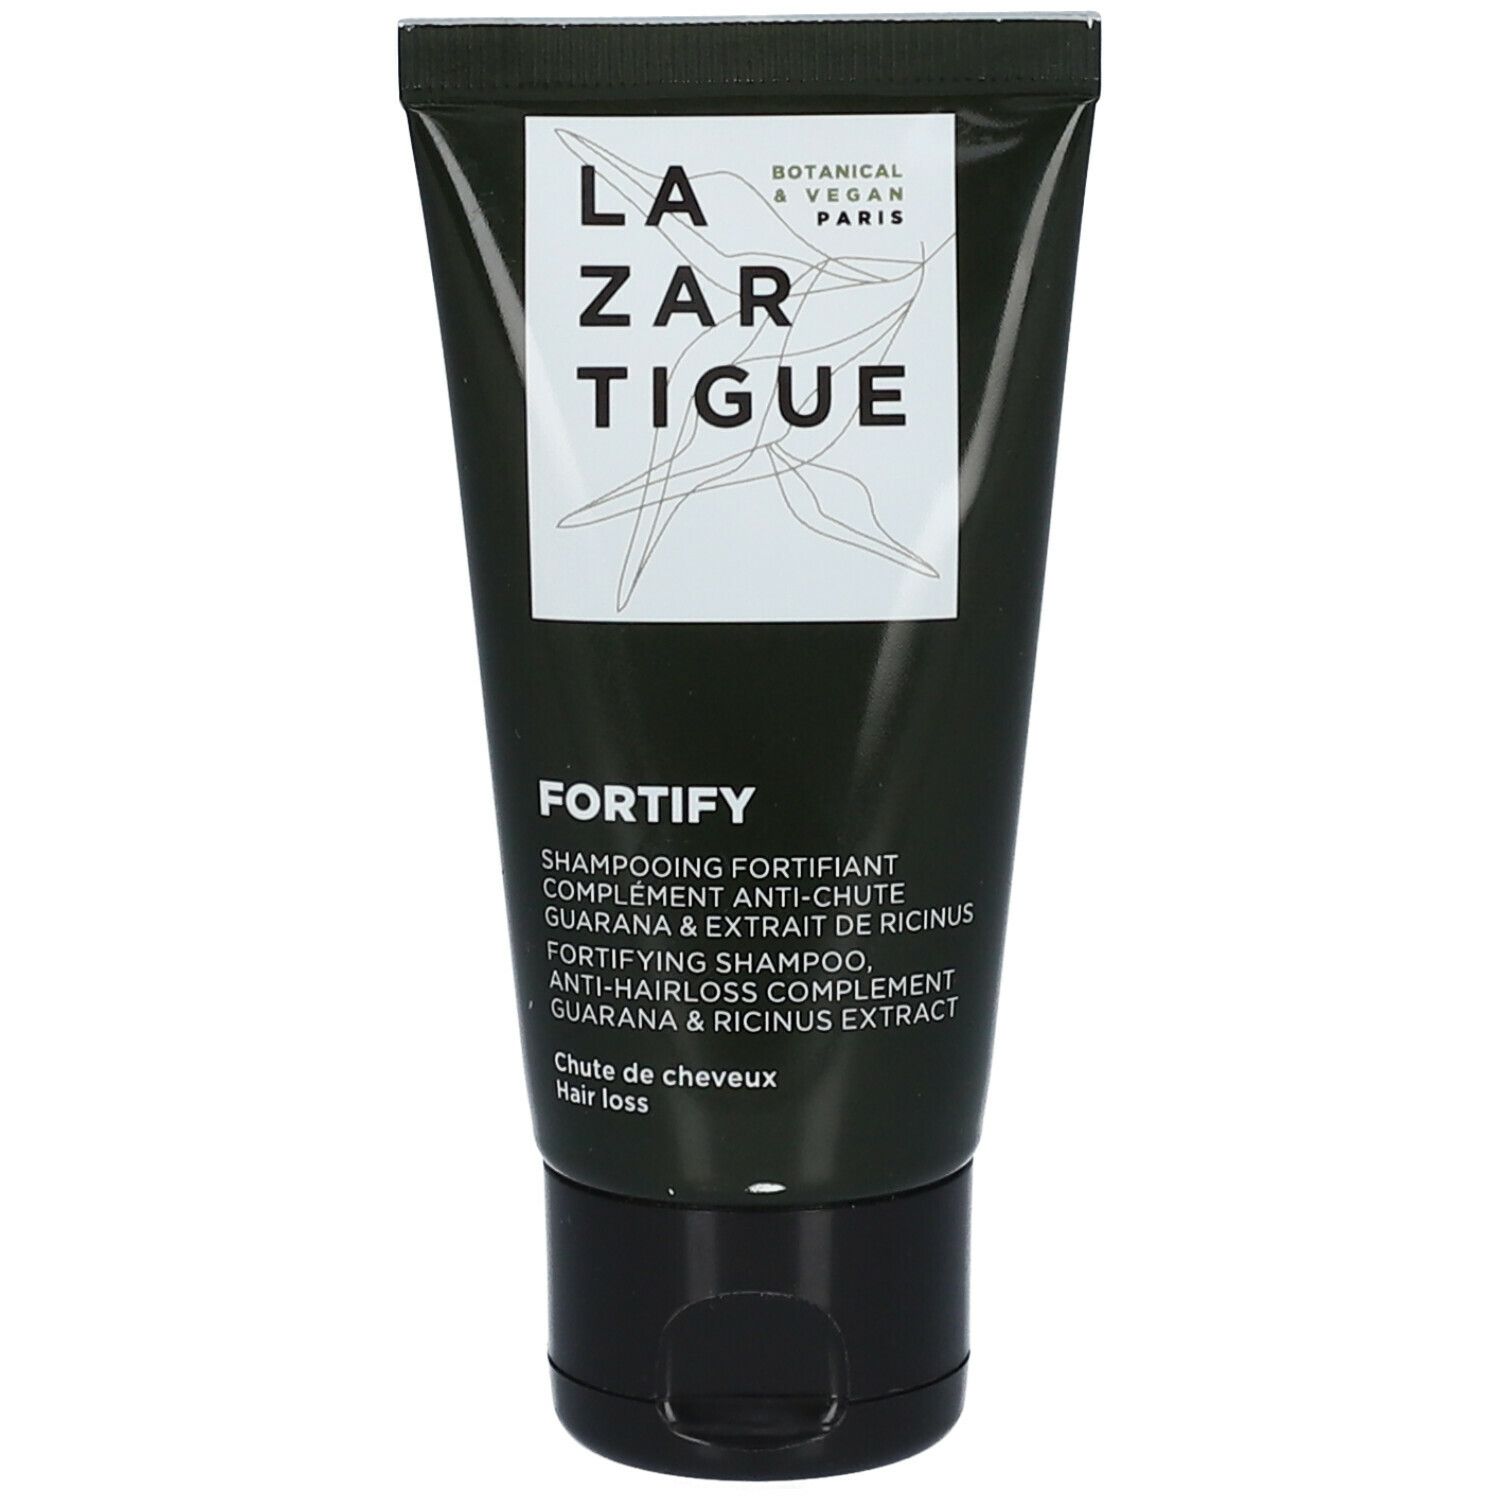 Lazartigue Fortify Shampooing Fortifiant Complément Anti-Chute Guarana & Extrait de Ricinus 50 ml sh